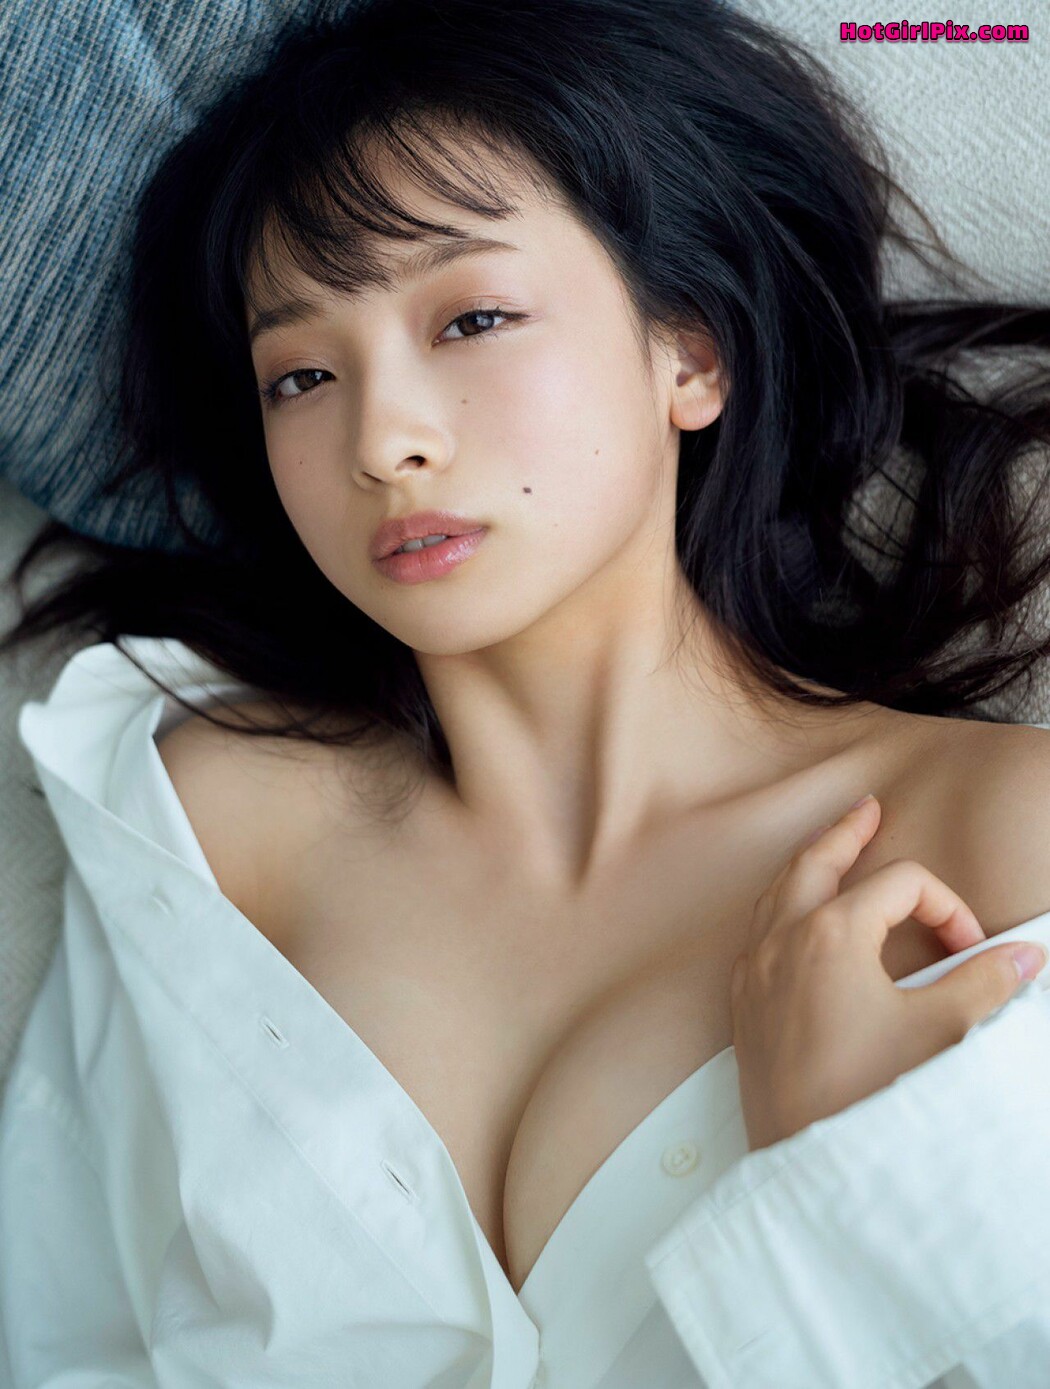 [FRIDAY] Asuka Hanamura - Beauty Bust See-Through